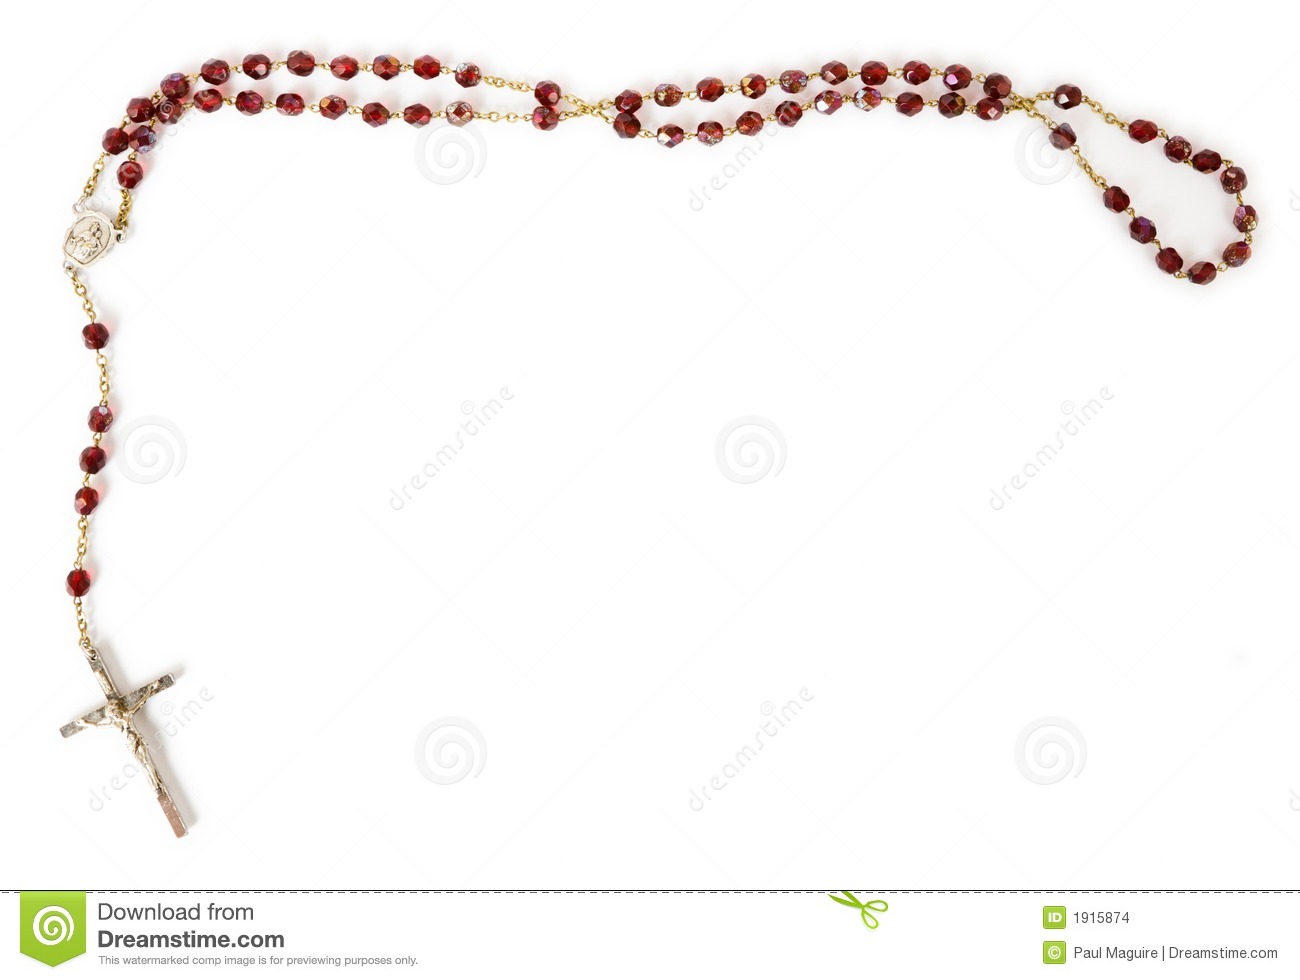 Catholic Rosary Beads Clipart Rosary Beads Isolated On White